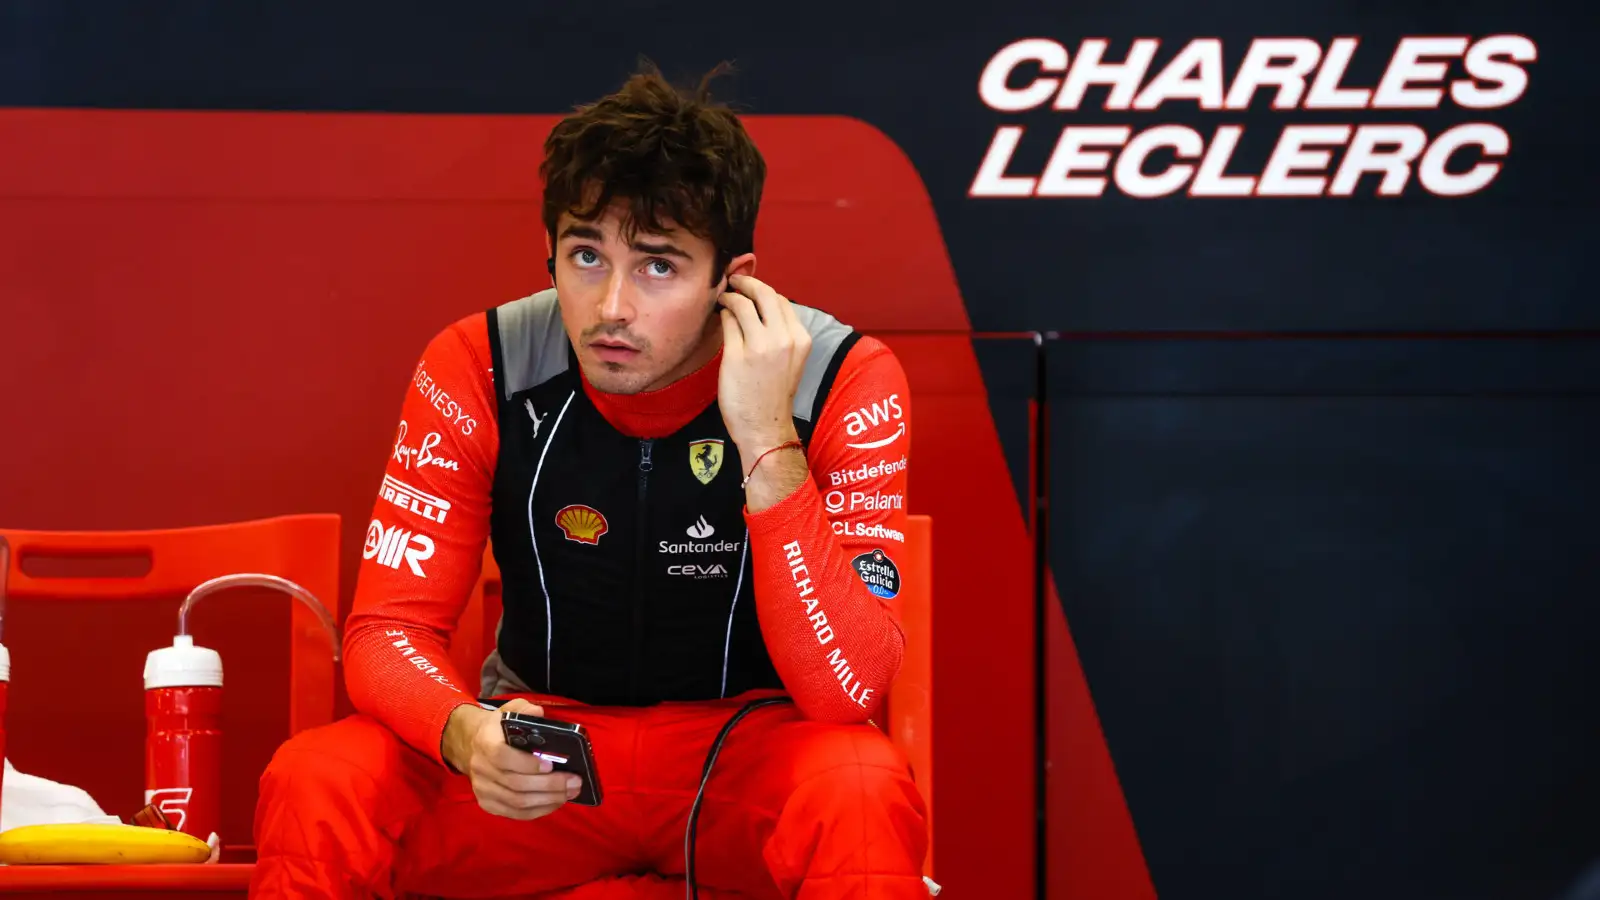 Charles Leclerc looks on in the Ferrari garage at the Abu Dhabi Grand Prix.